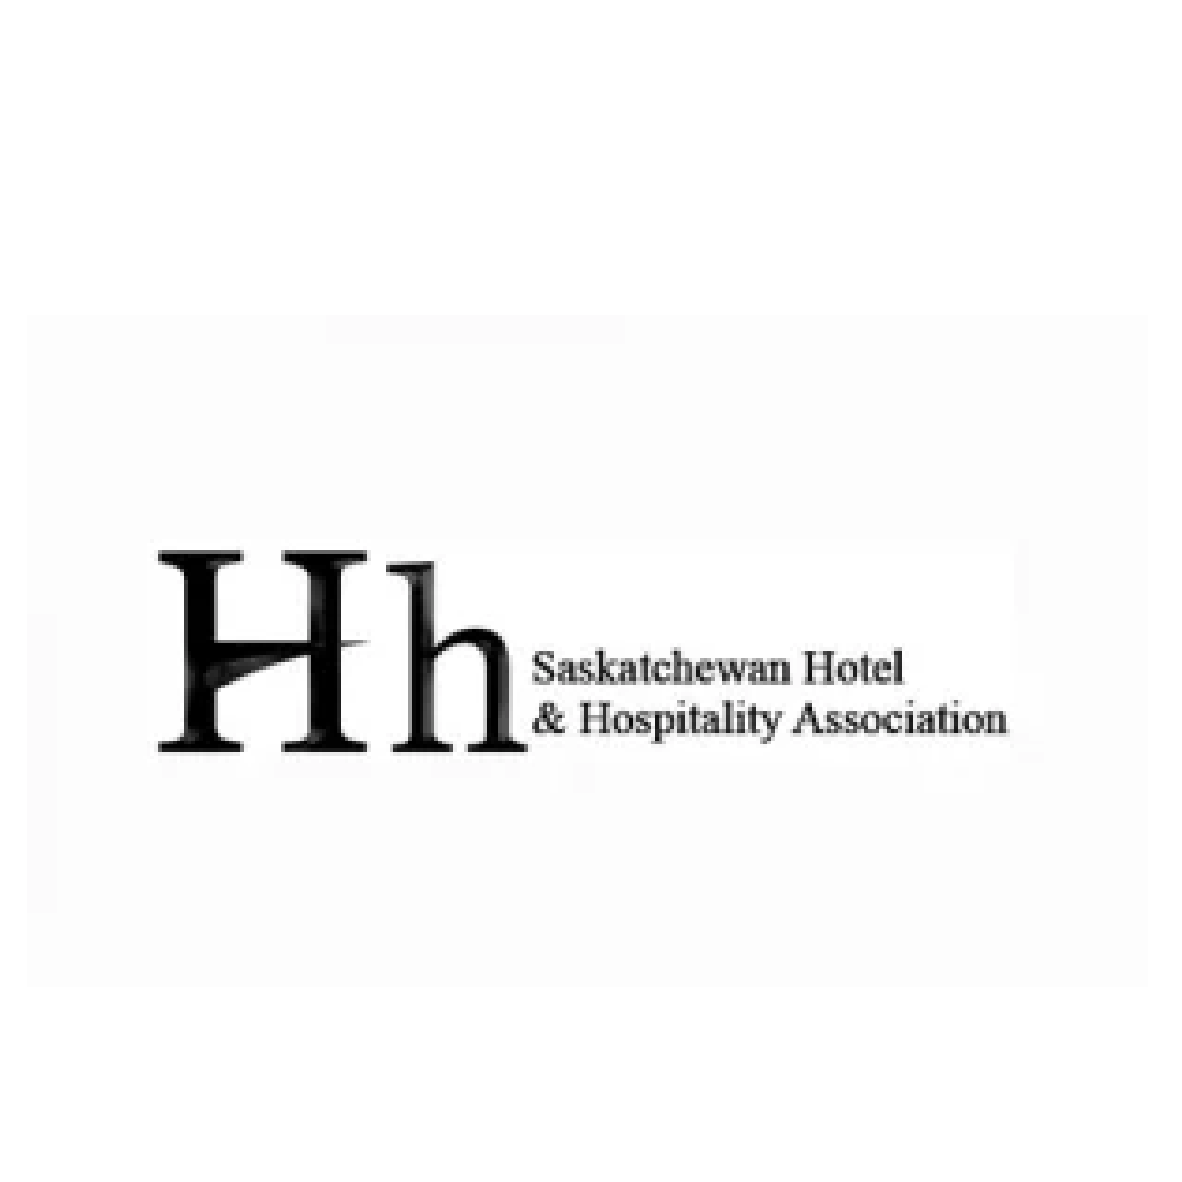  Saskatchewan Hotel &amp; Hospitality Association logo 